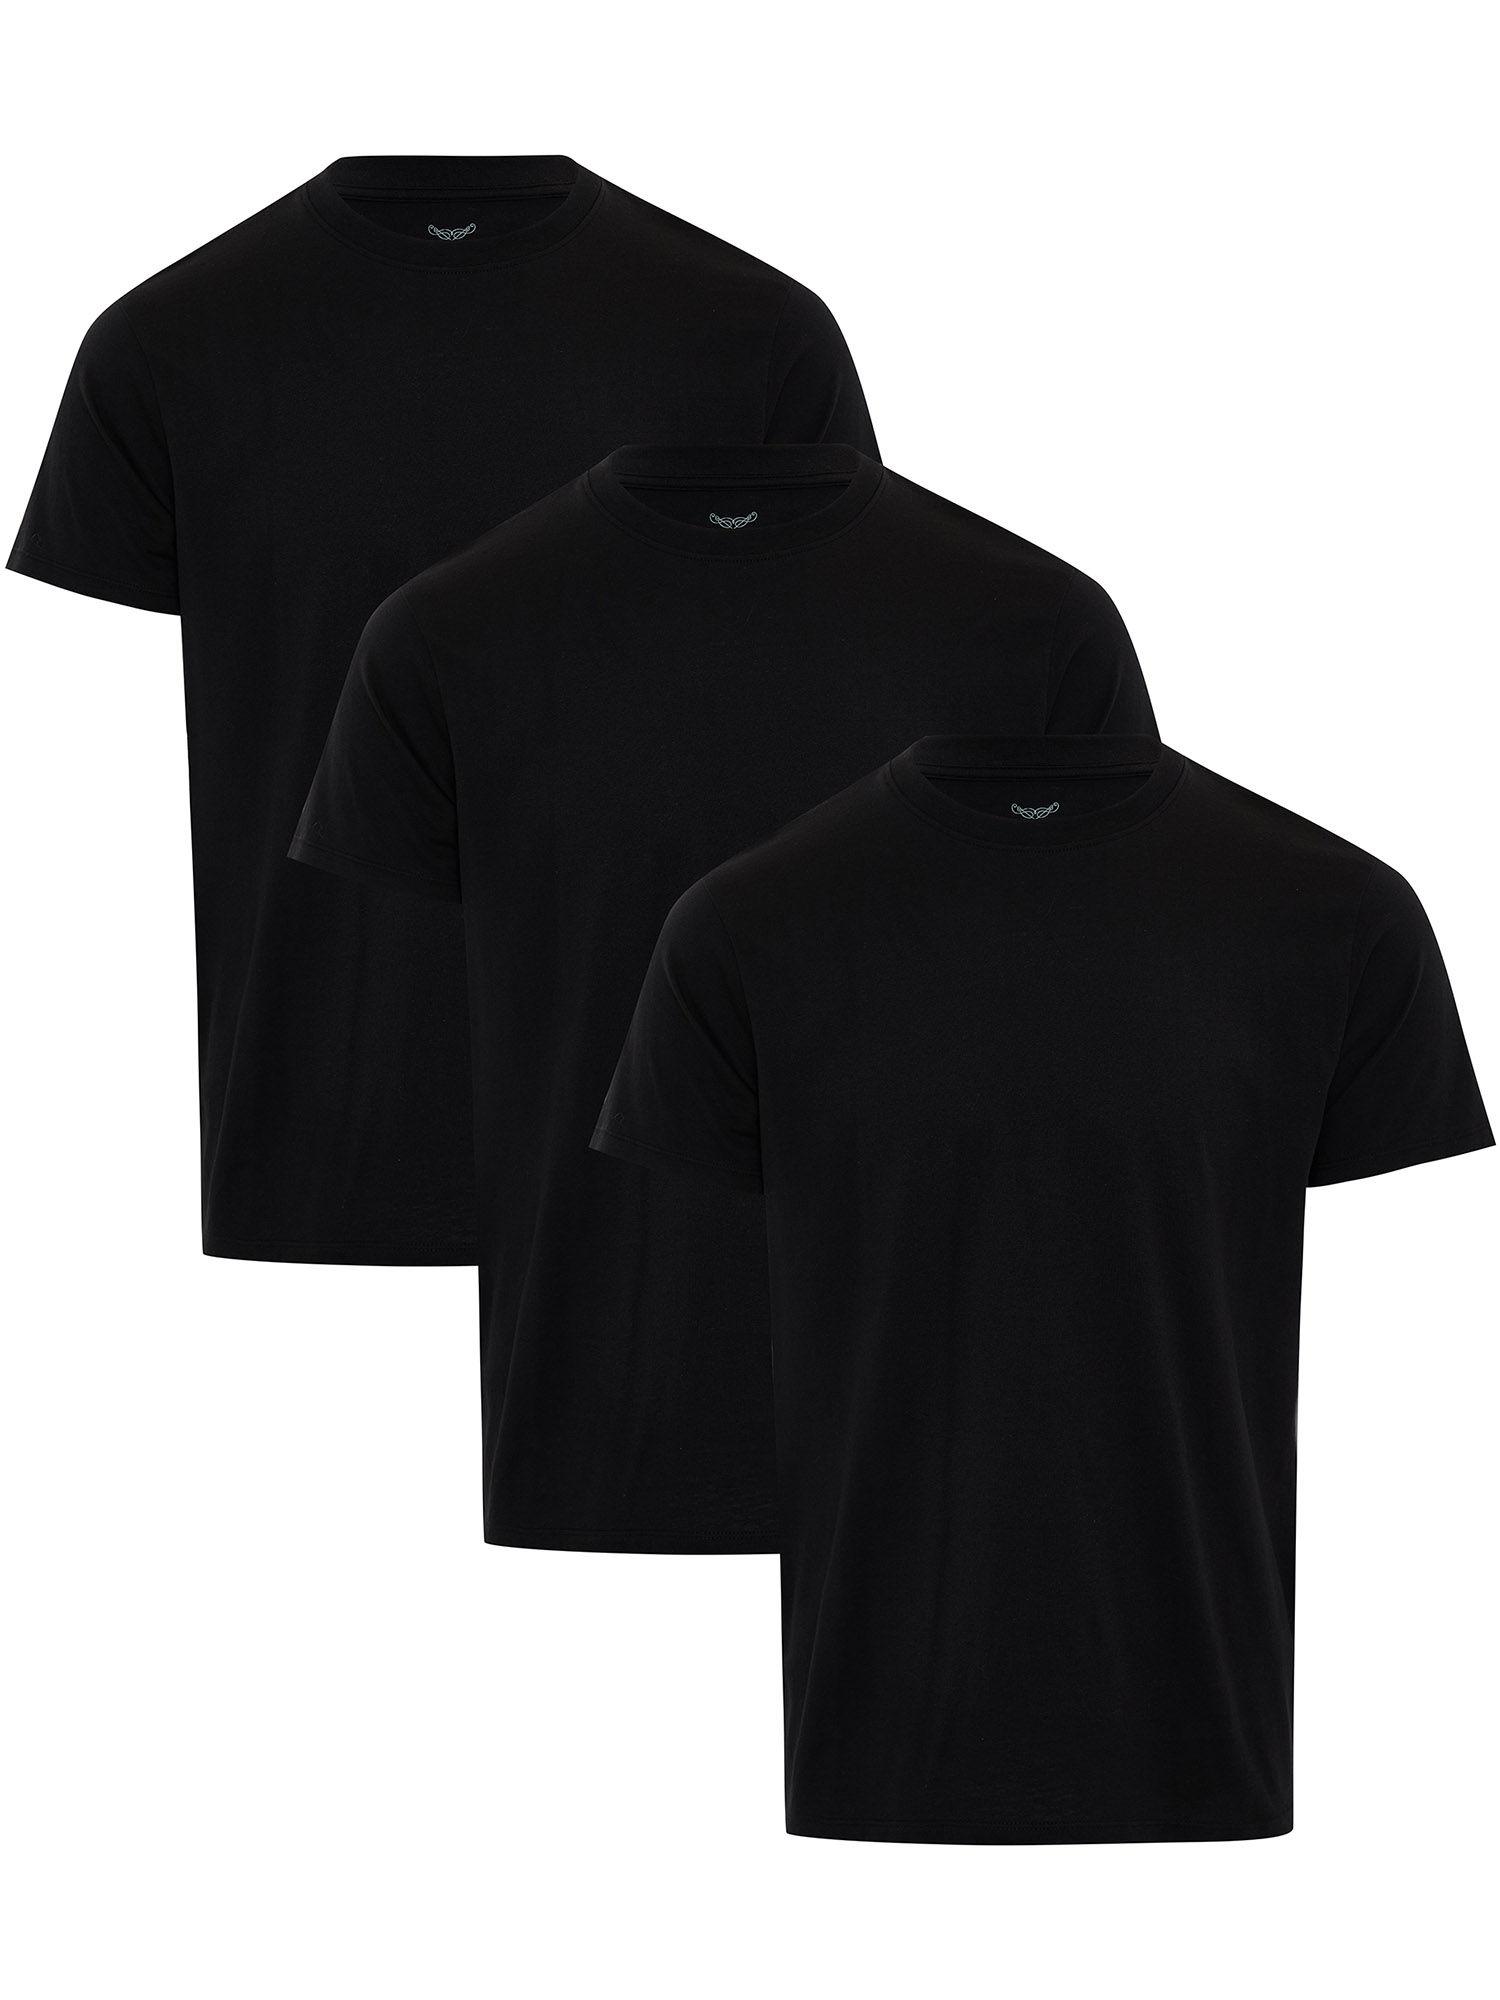 men black essential short sleeve t-shirts (pack of 3)